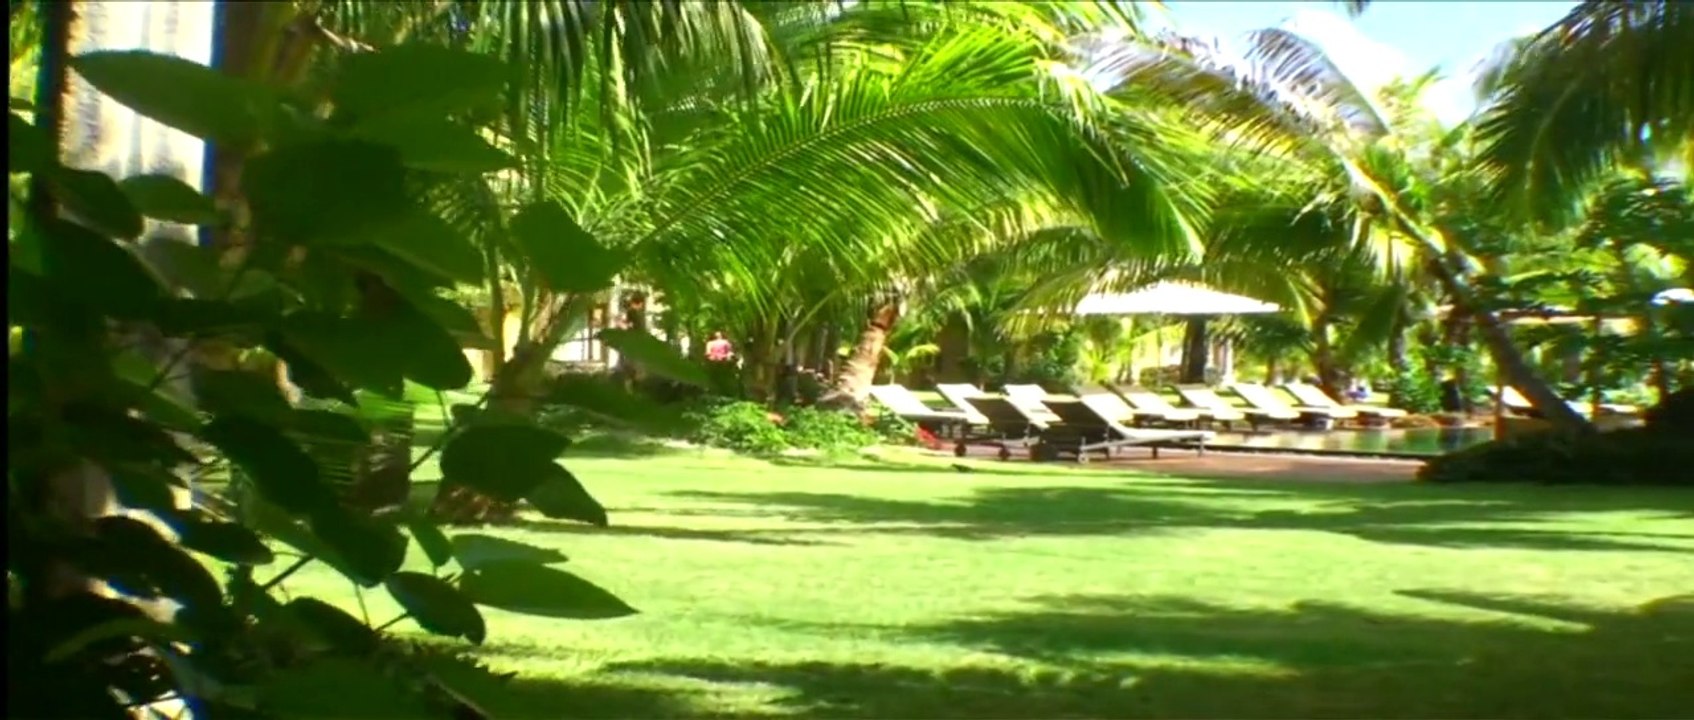 Luxushotel Strandhotel Traumurlaub  Dinarobin Hotel Golf & Spa - Mauritius - Family Suite